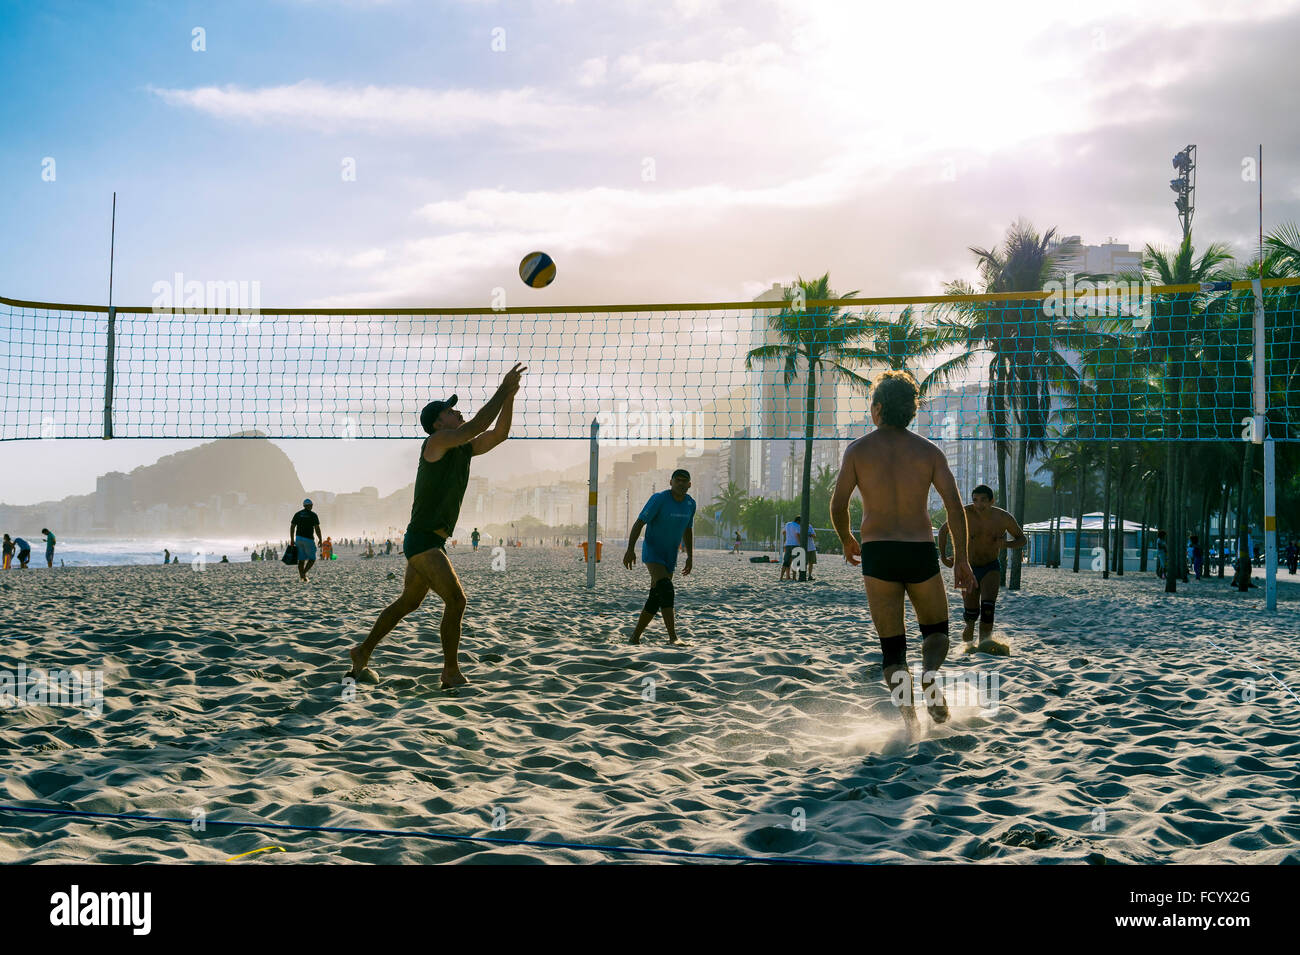 RIO DE JANEIRO - OCTOBER 30, 2015: A group of young Brazilian men play a game of volleyball at sunset at the Leme, Copacabana. Stock Photo